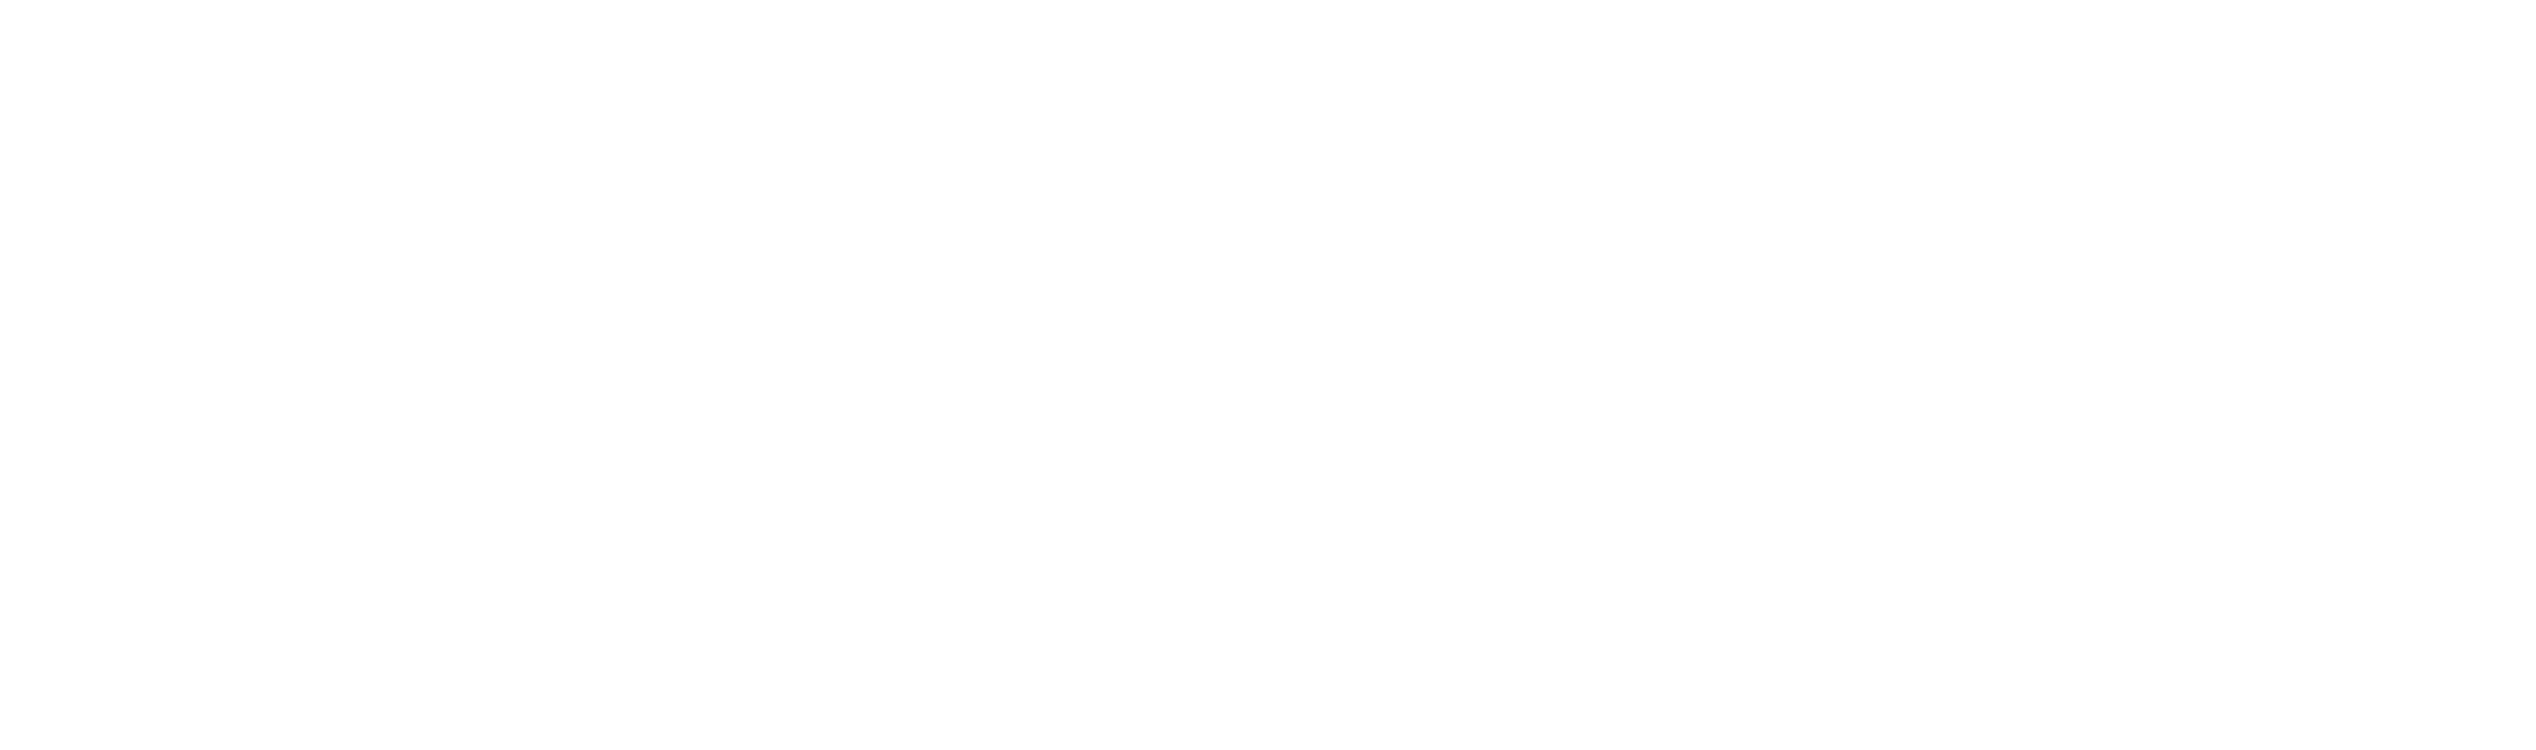 dallas logo